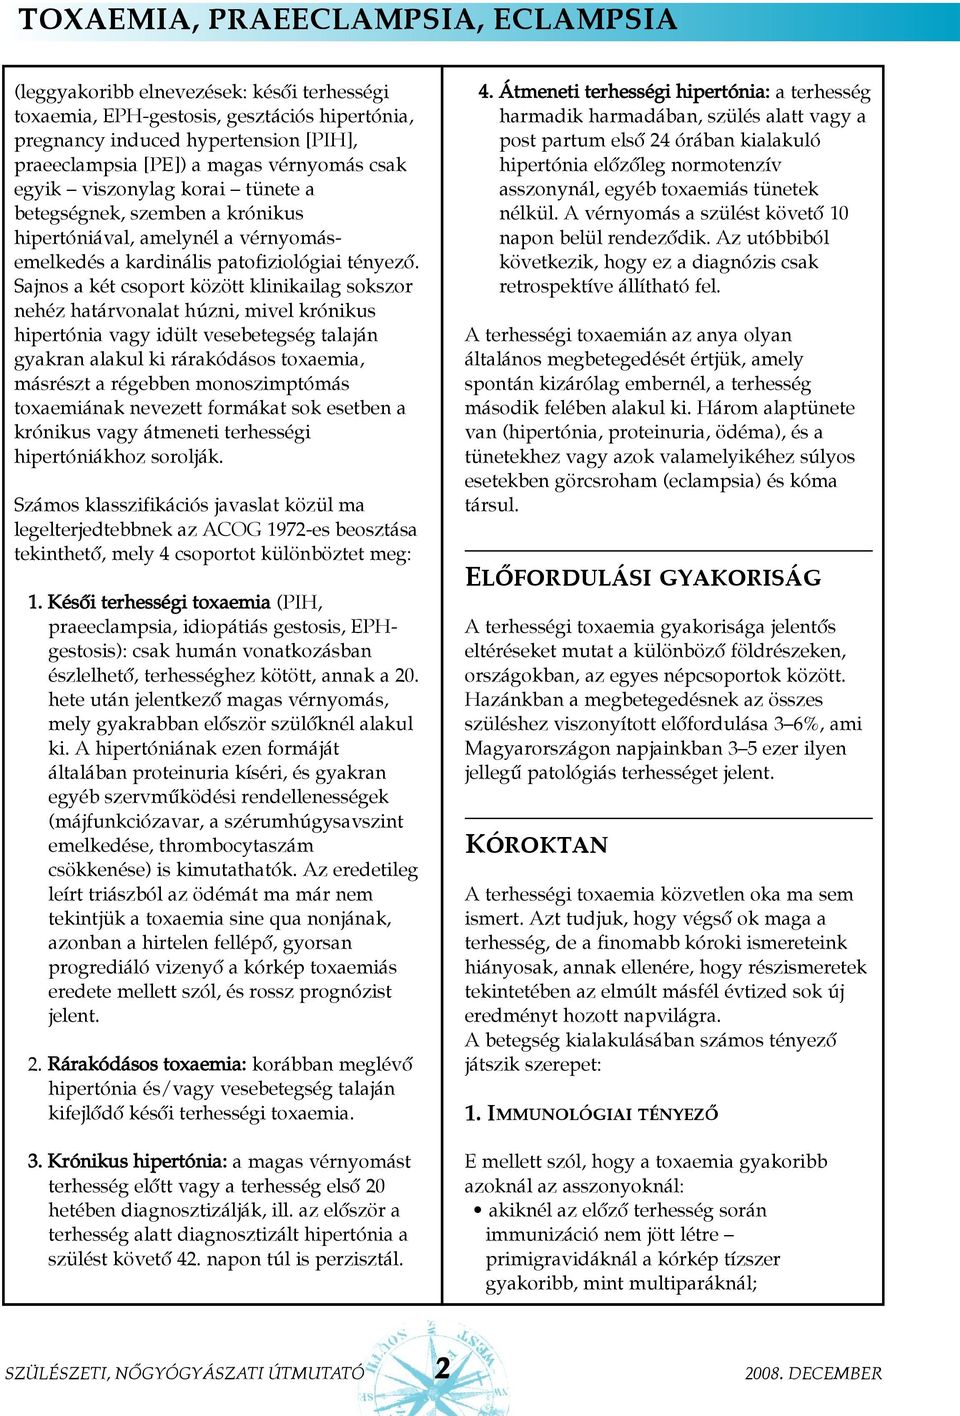 Hipertónia Archívum - Page 10 of 11 - Dr. Barna István